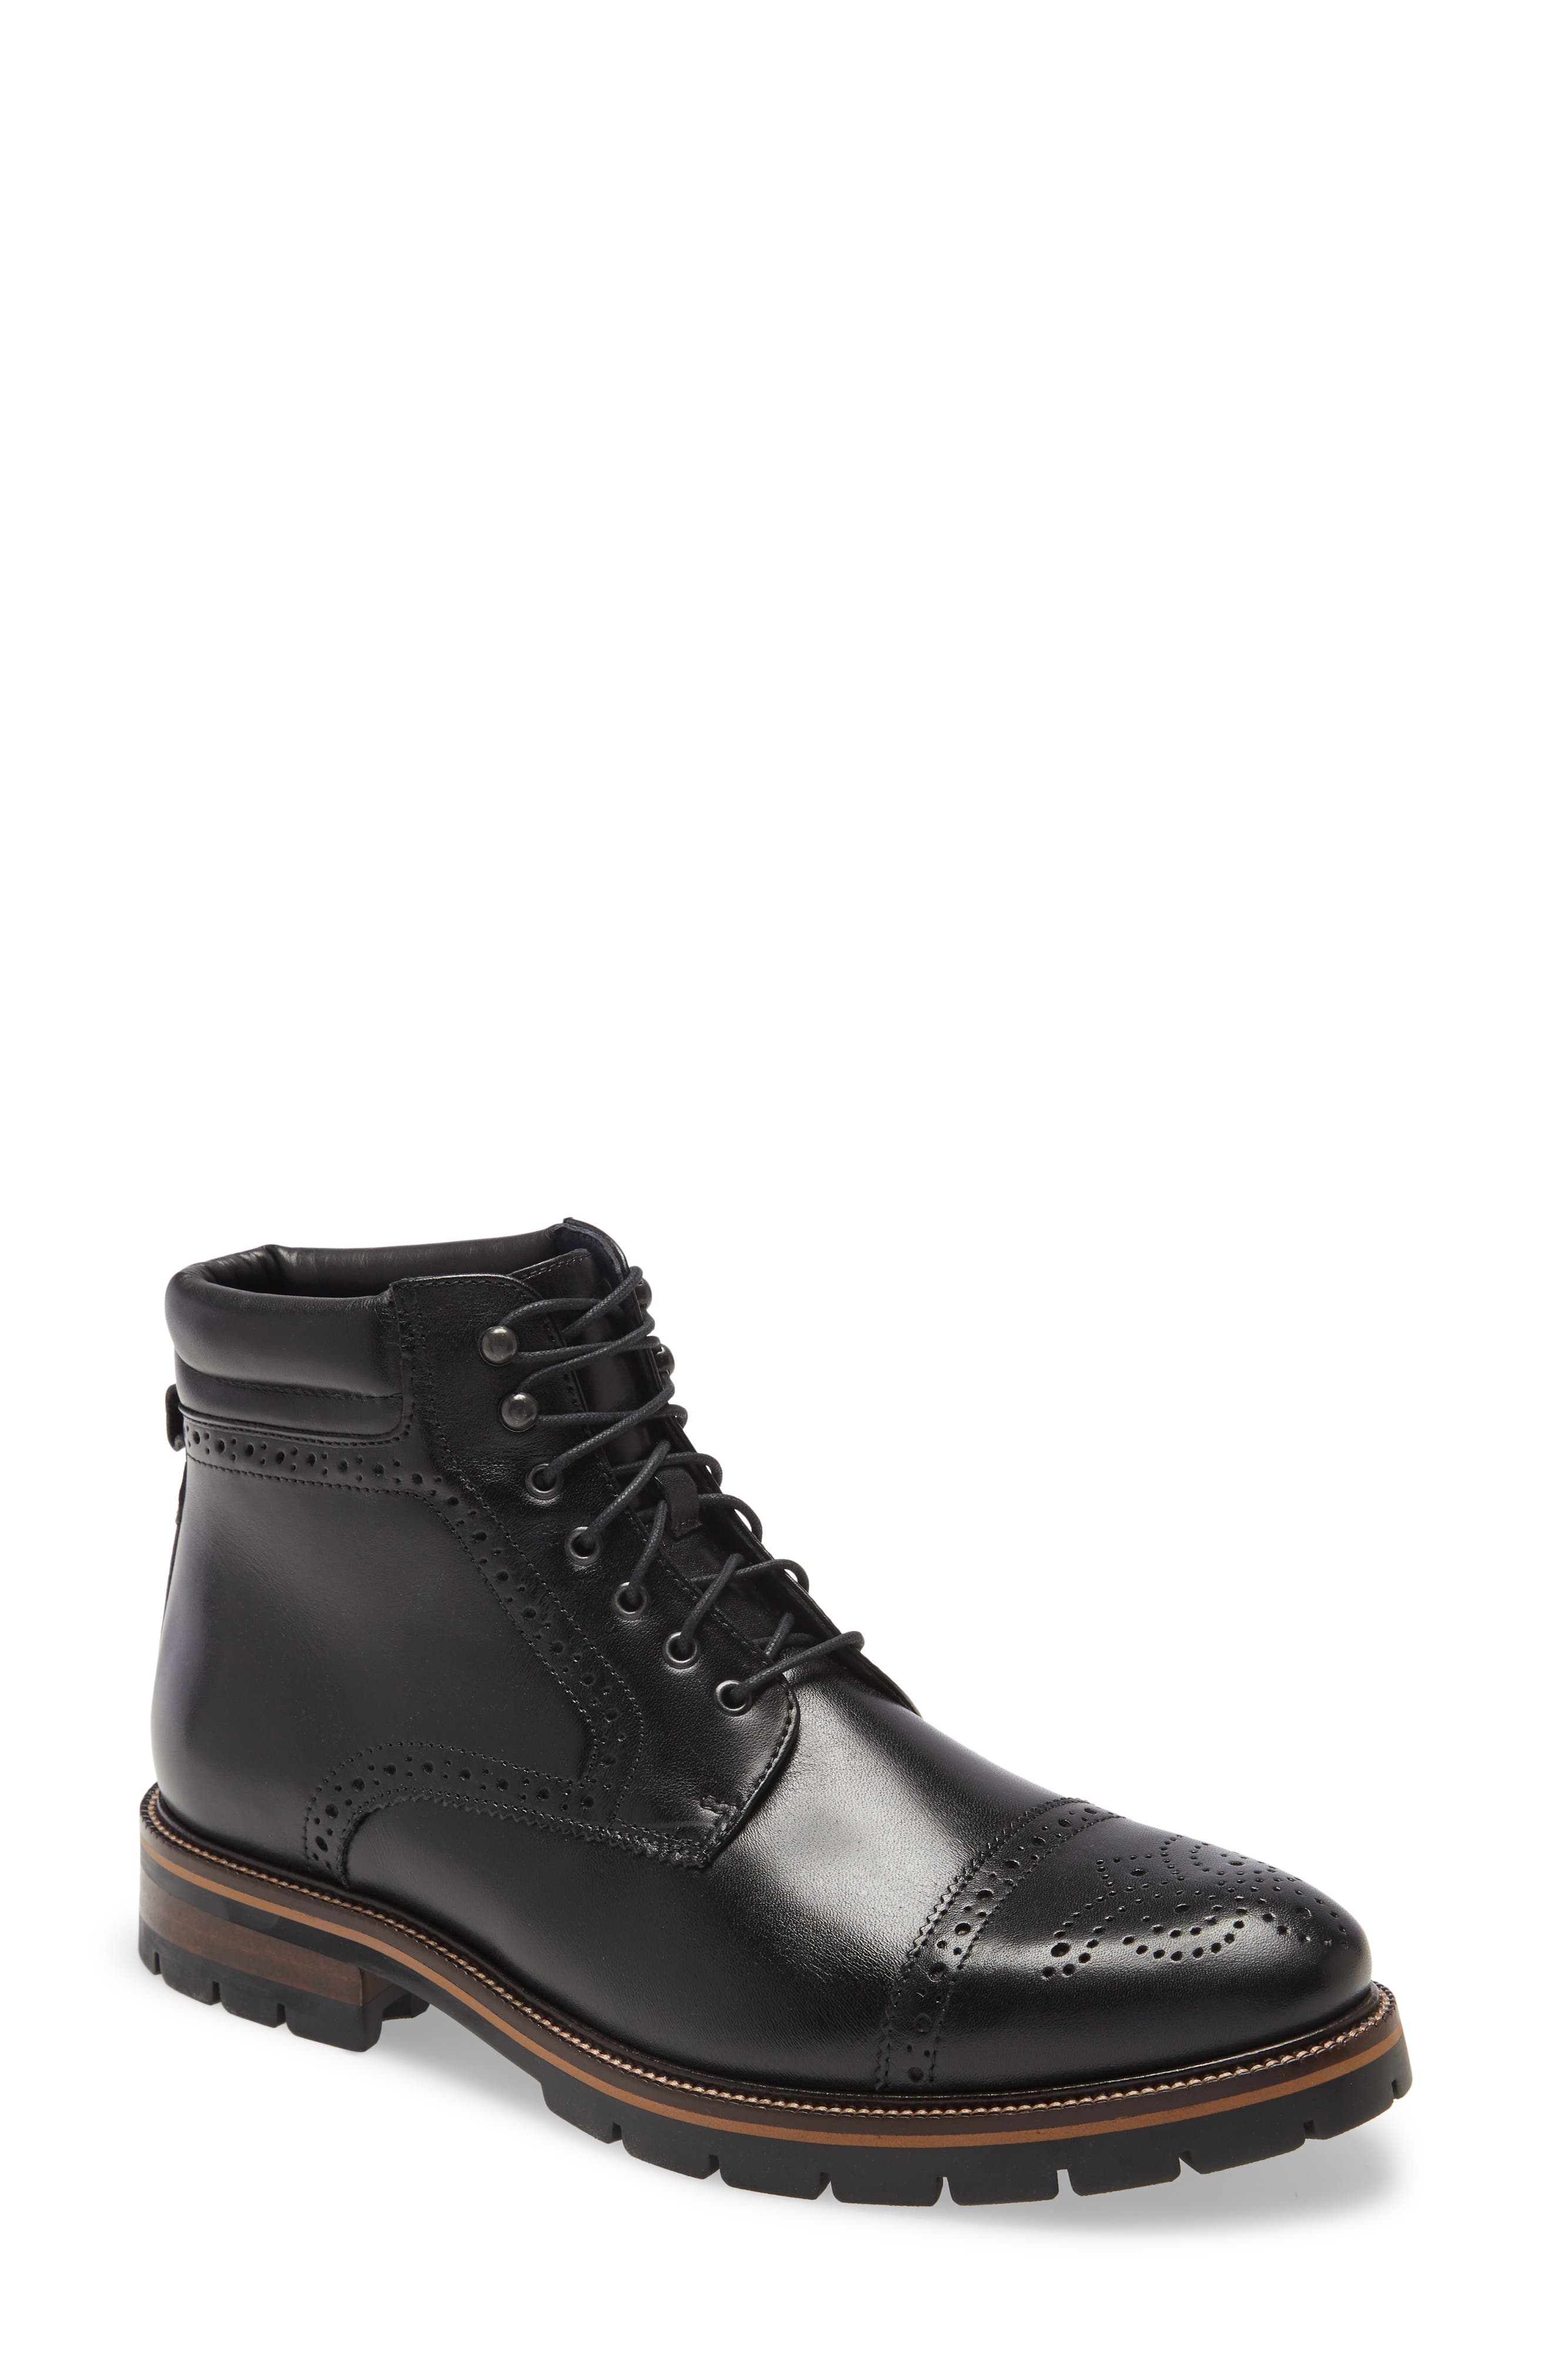 Details about   591986 PF50 Men's Shoes Size 10 M Dark Tan Leather Lace Up Johnston & Murphy 